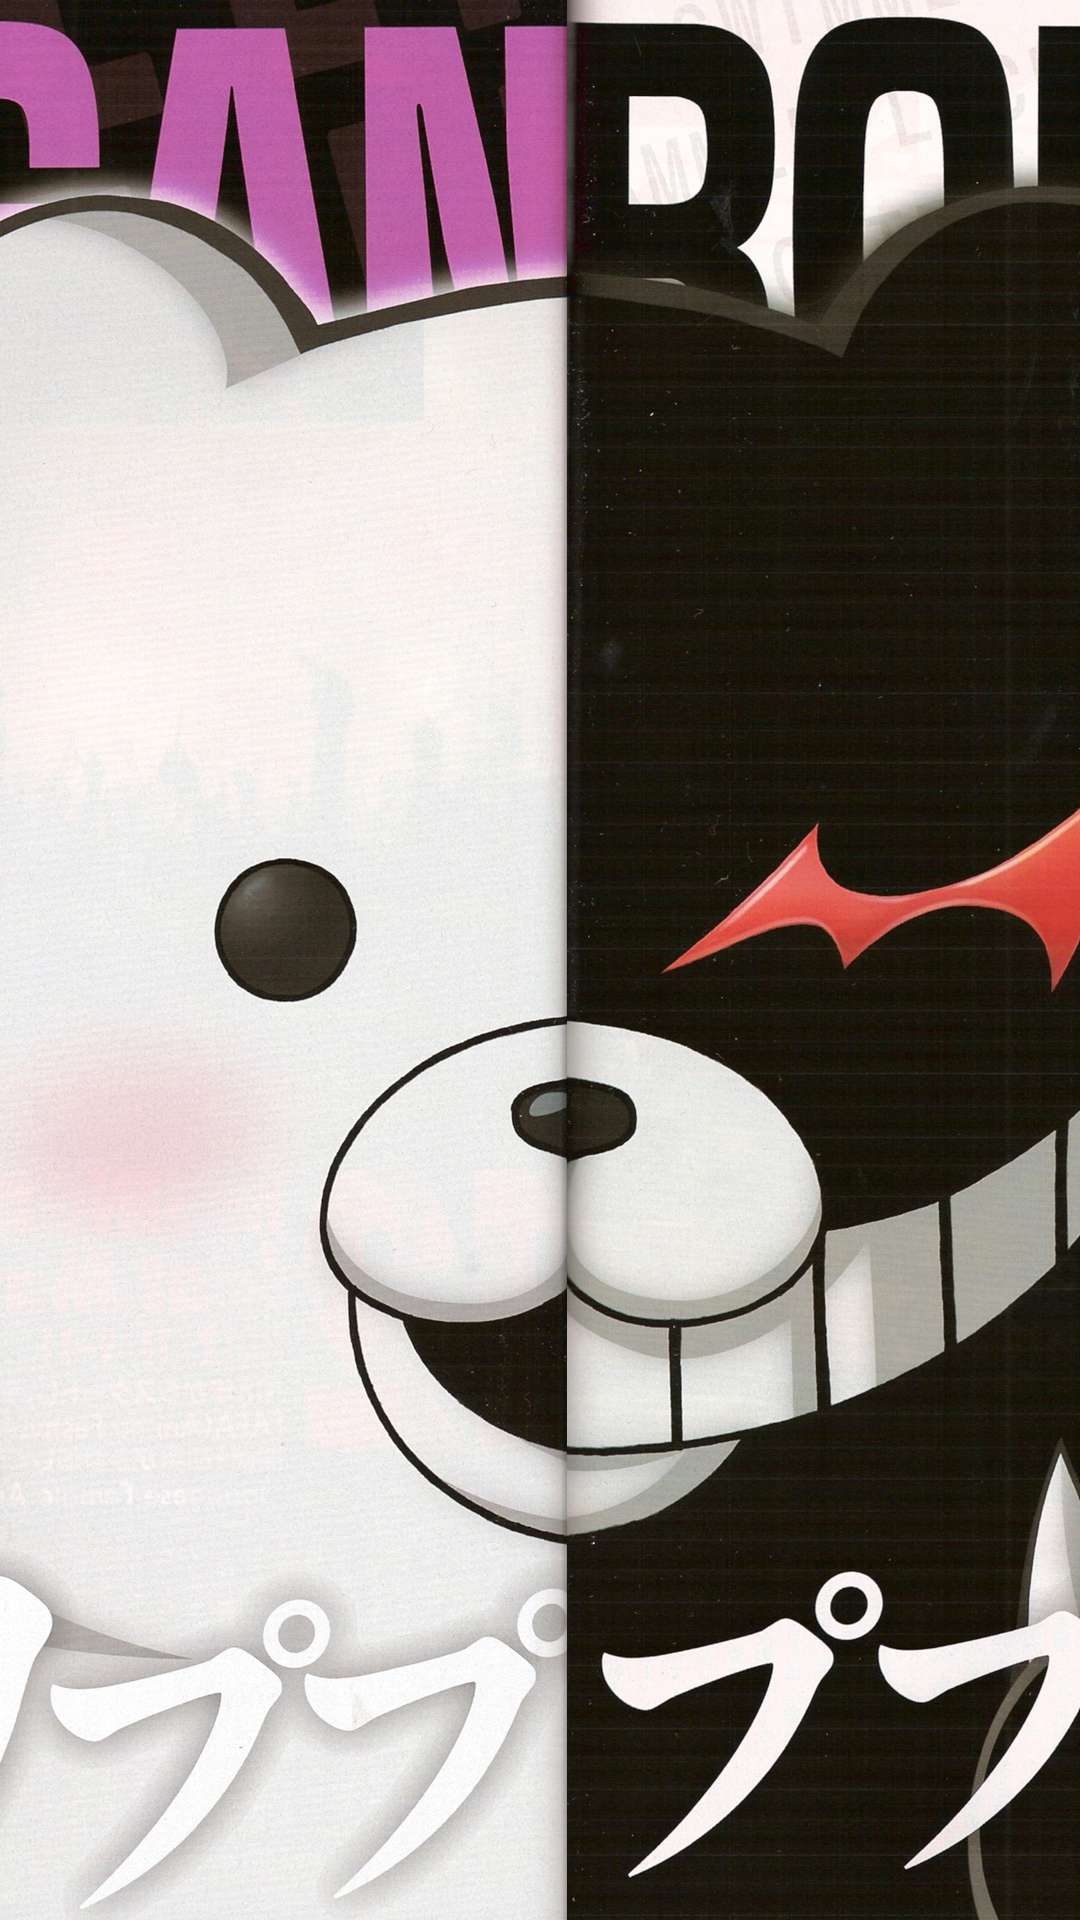 Danganronpa  Monokuma  Anime wallpaper phone Scary wallpaper Anime  wallpaper iphone